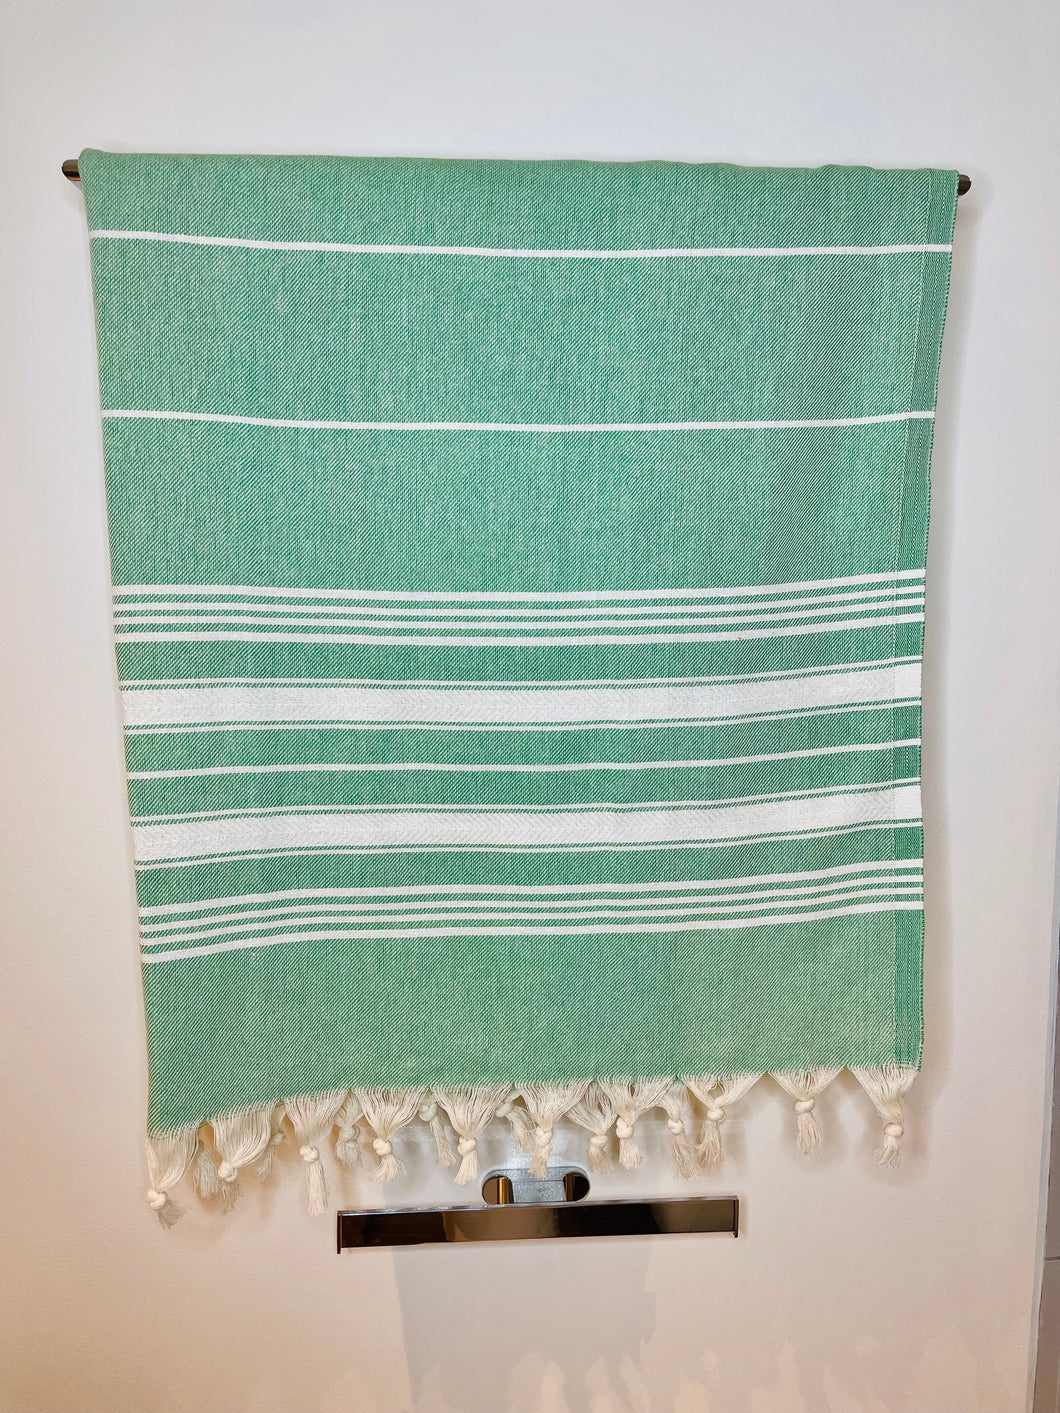 Soft Peshtemal - Turkish Bath/Beach Towel – Herringbone Green